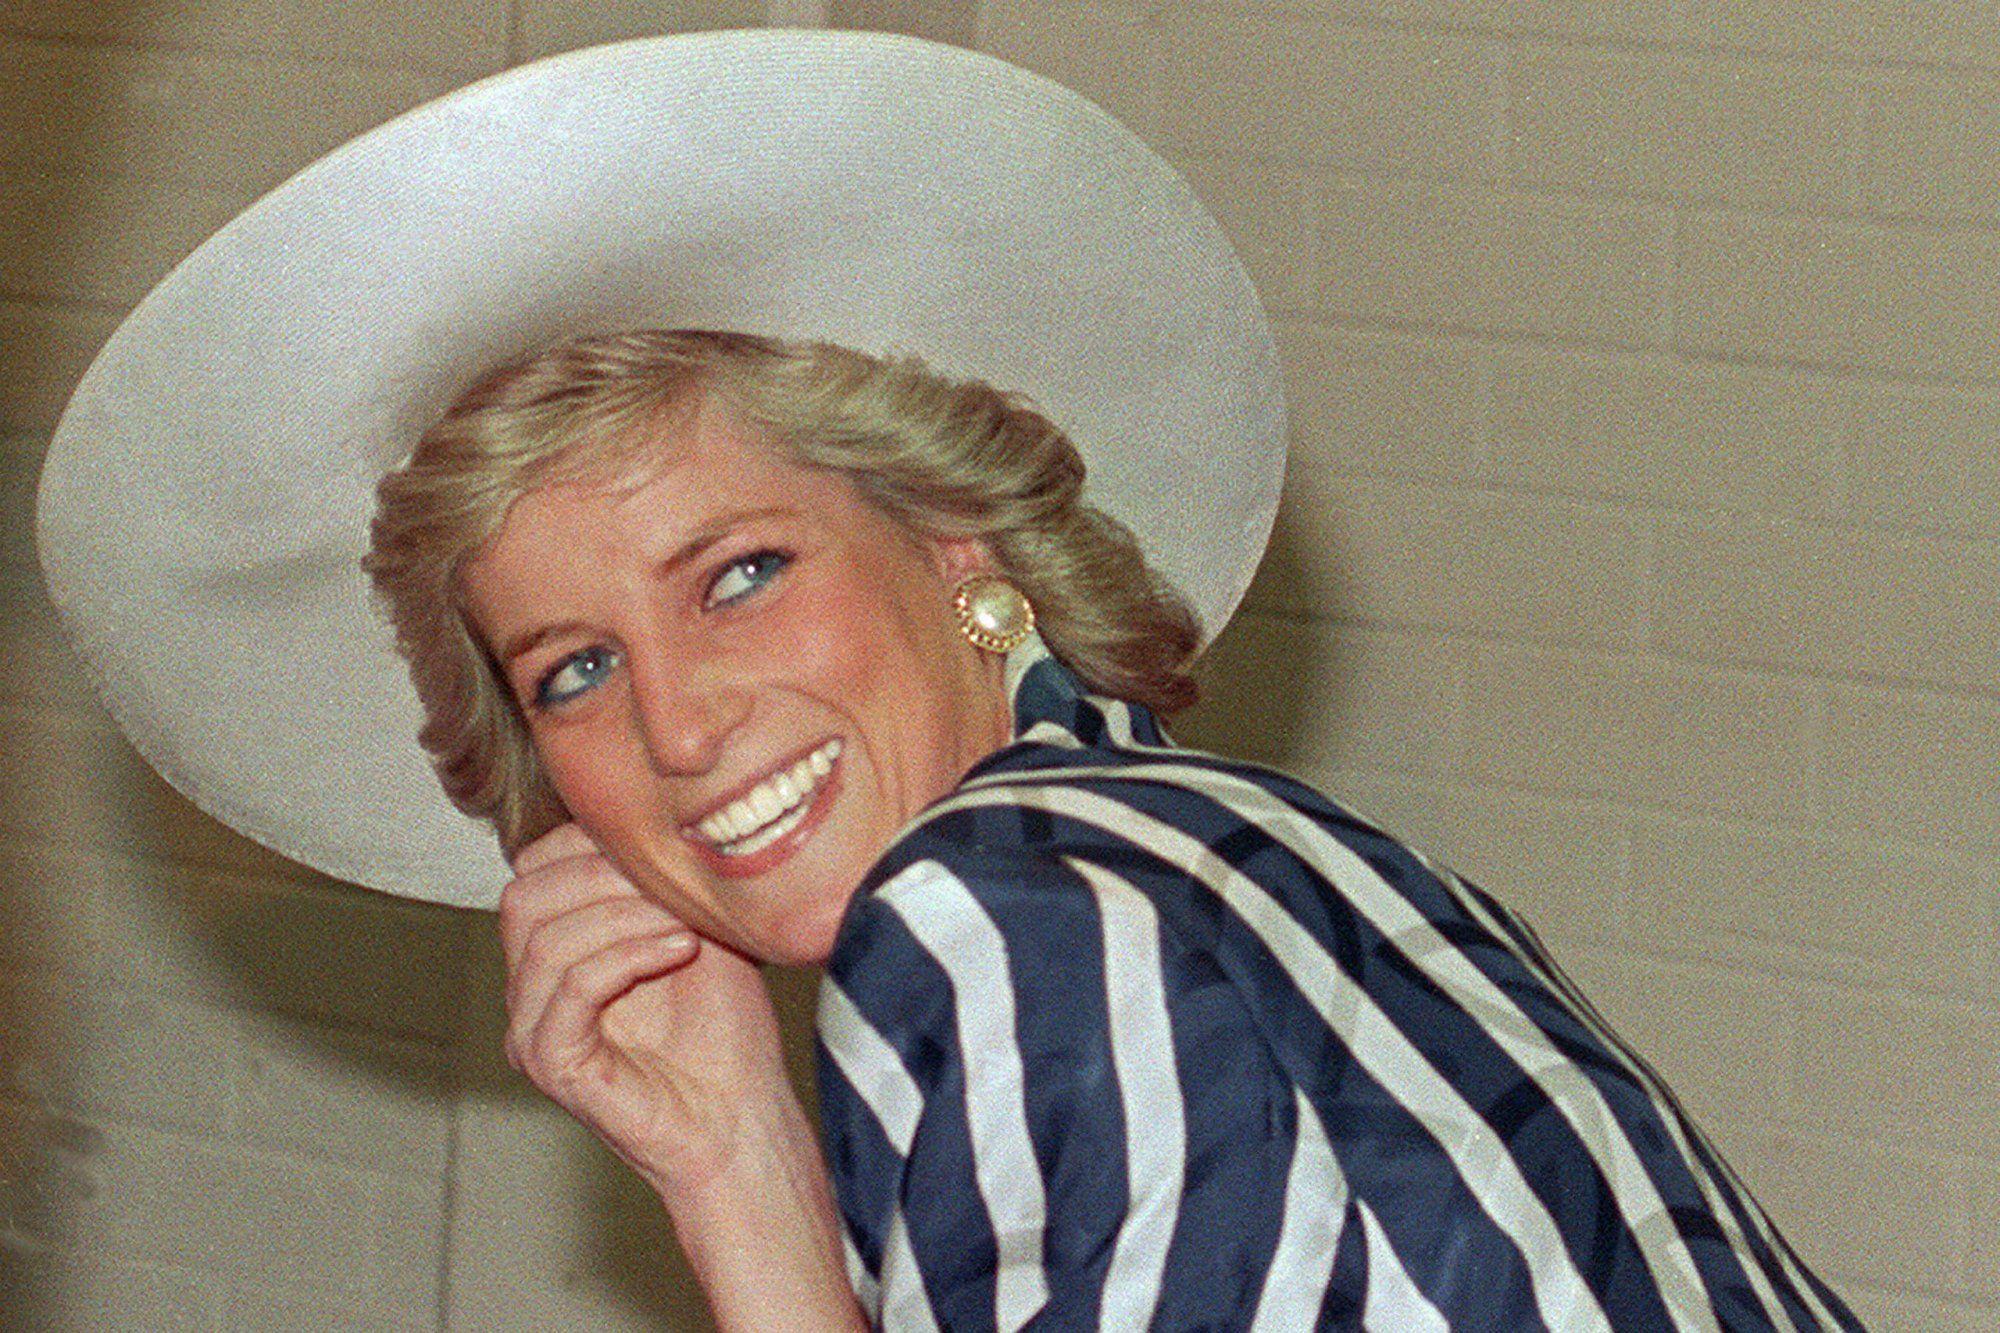 Princess Diana Wallpapers Image Photos Pictures Backgrounds